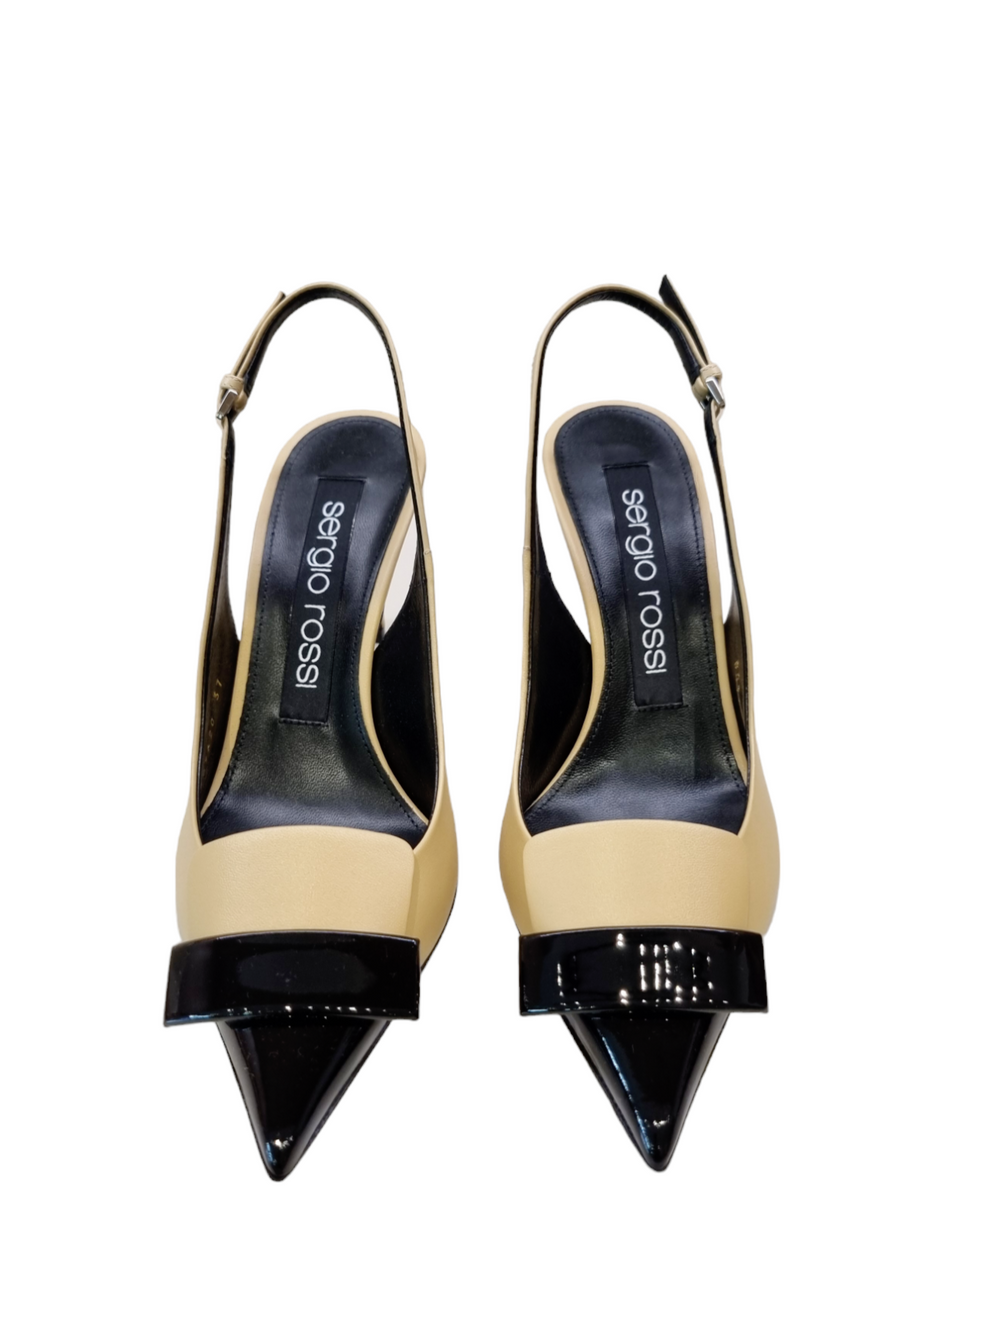 Sr1 Beige With Black Toe Sling-back - SERGIO ROSSI - Liberty Shoes Australia